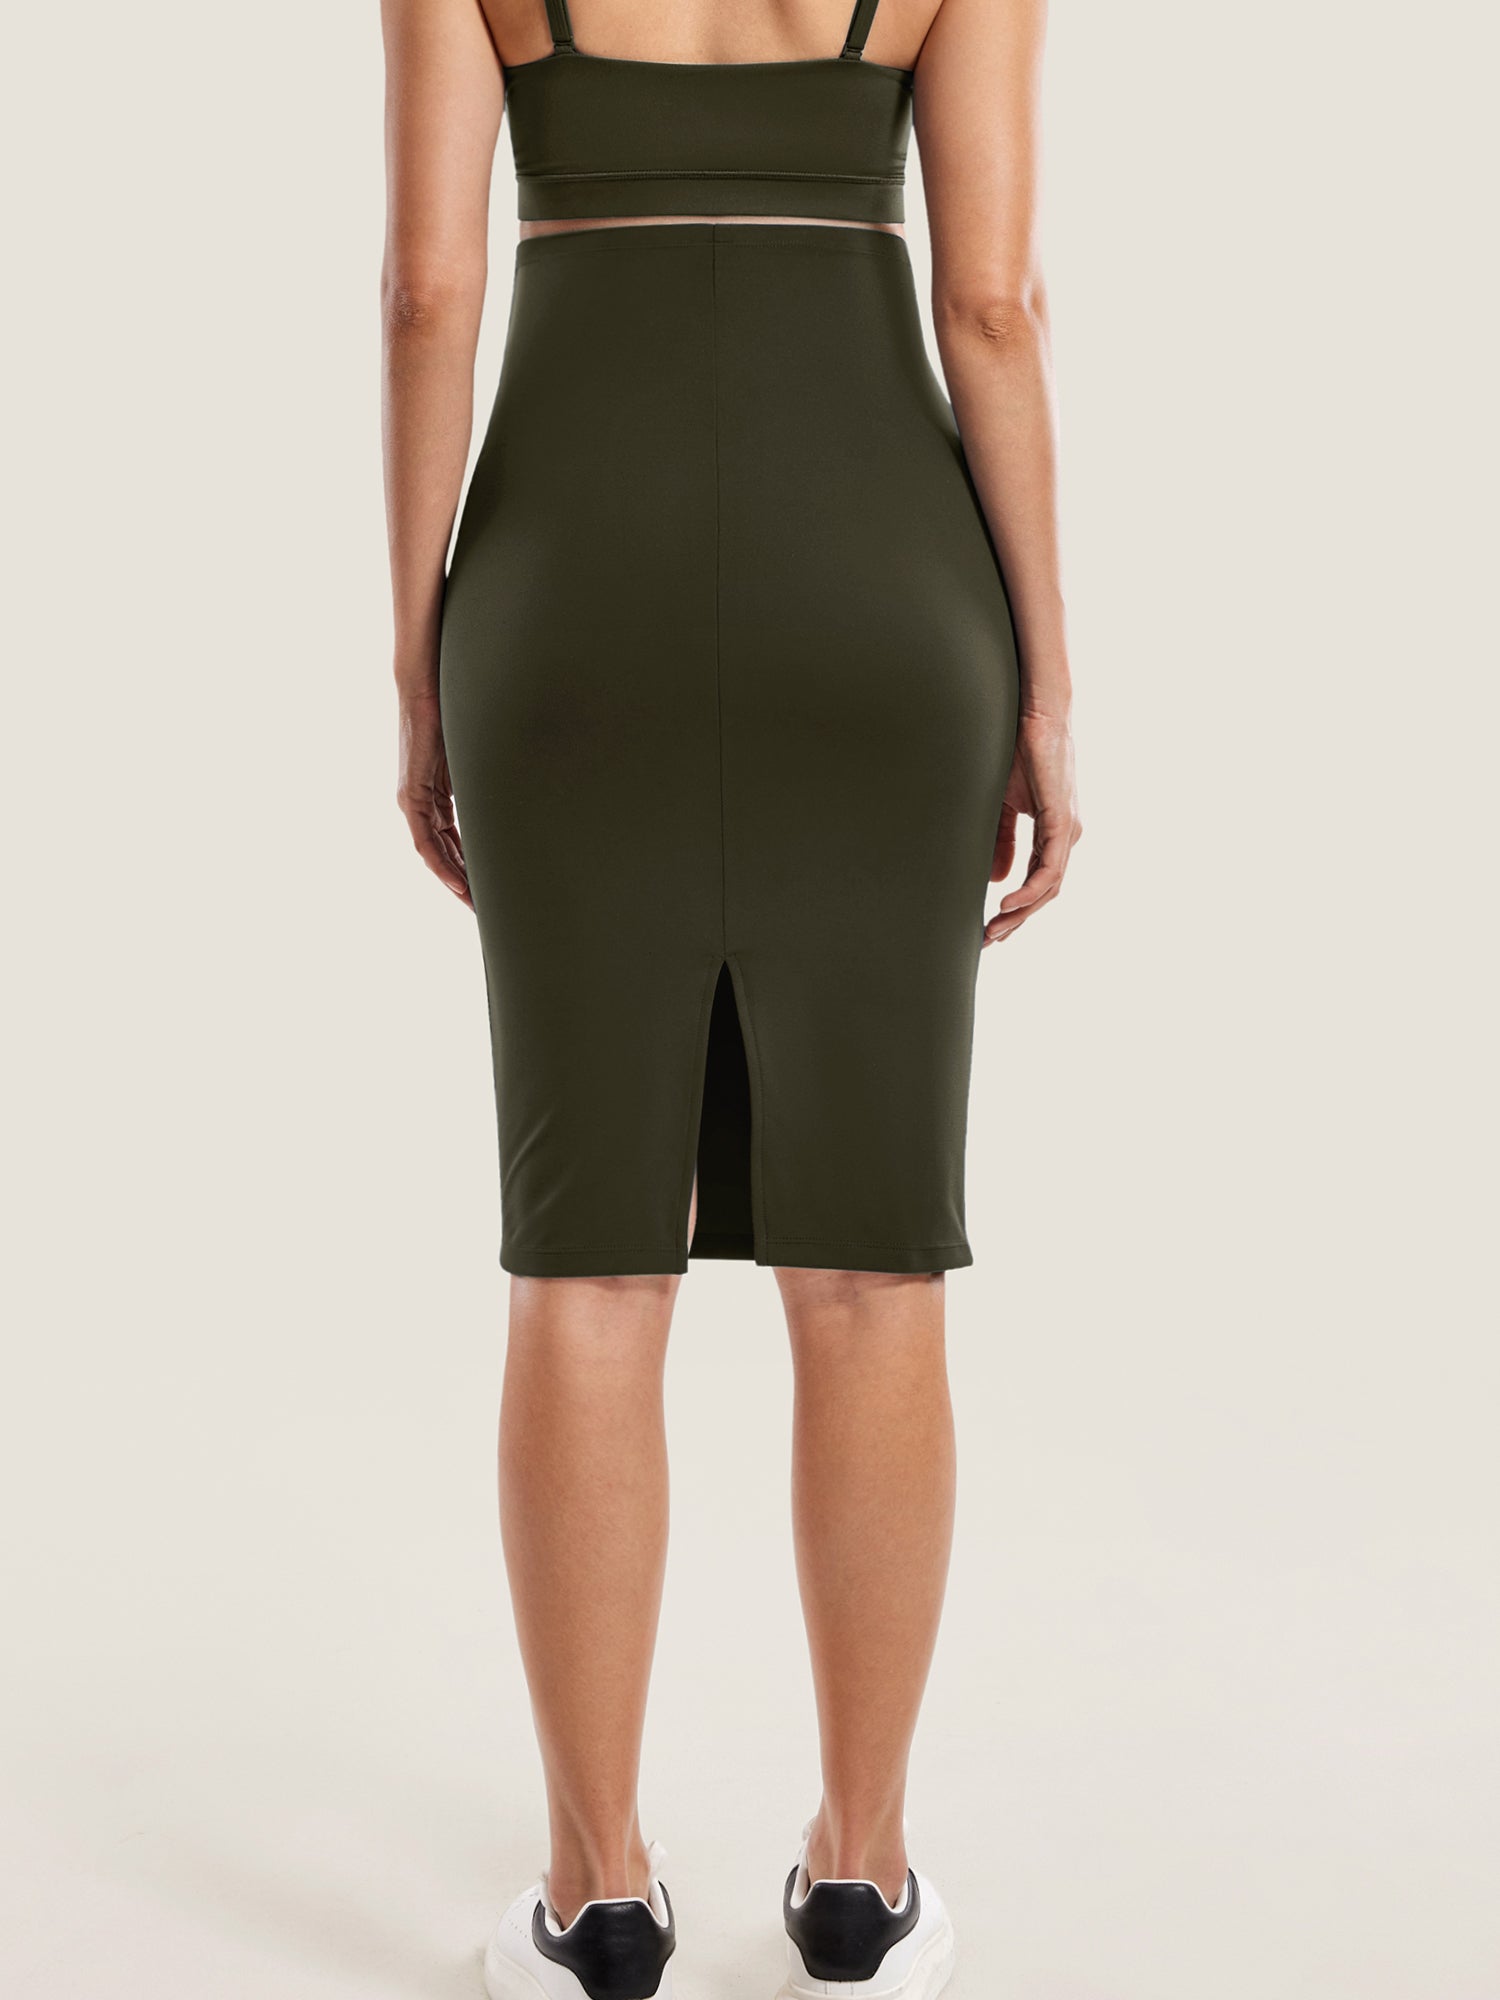 Natrelax™ Maternity High Waisted Midi Skirts Olive Green